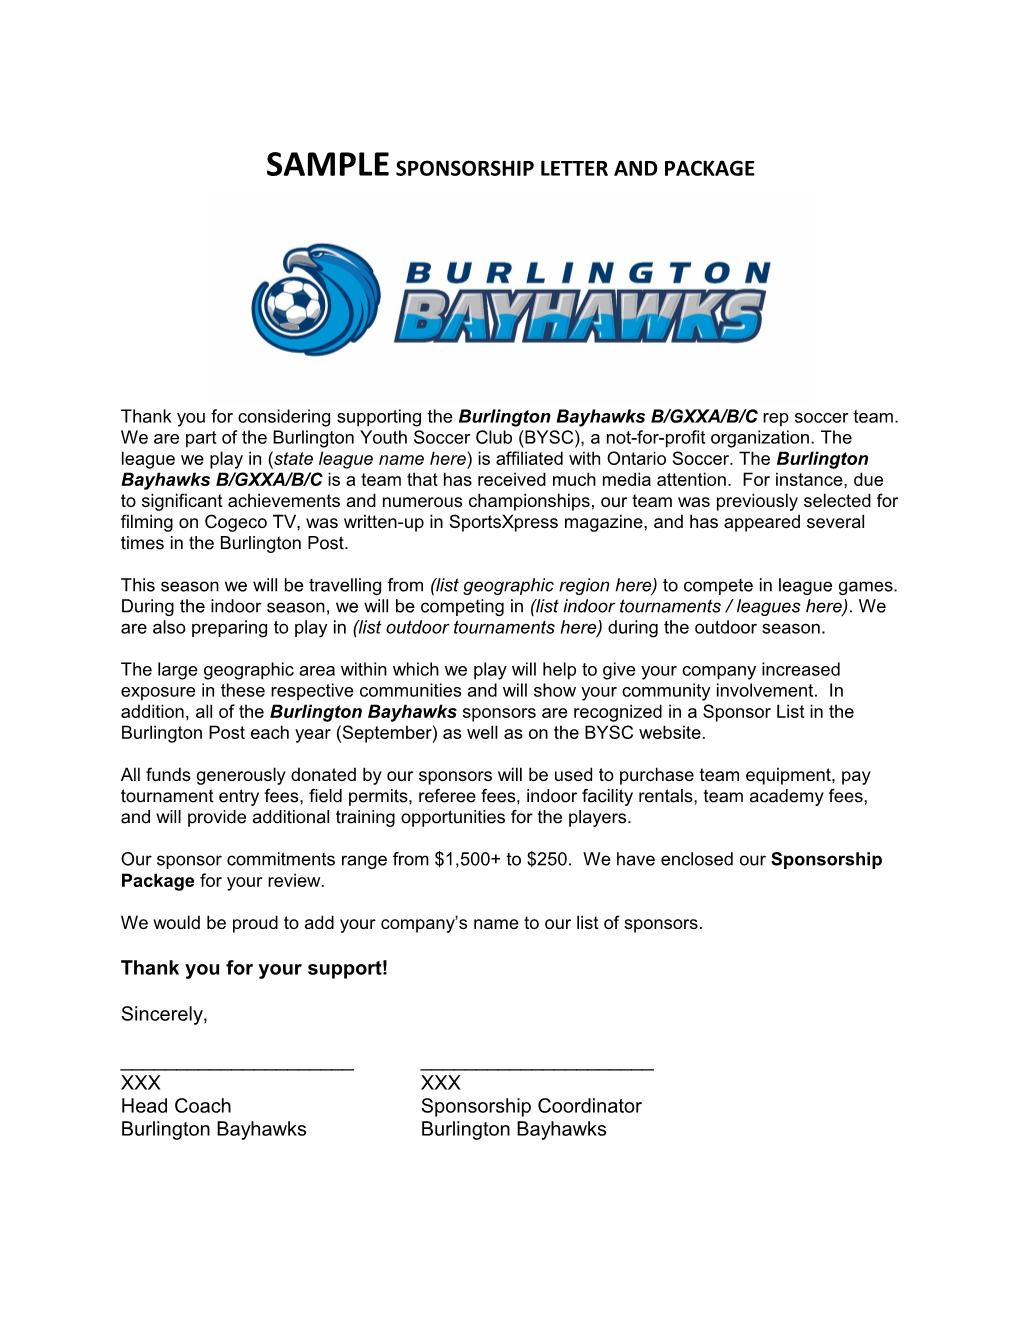 Sample Sponsorship Letter and Package